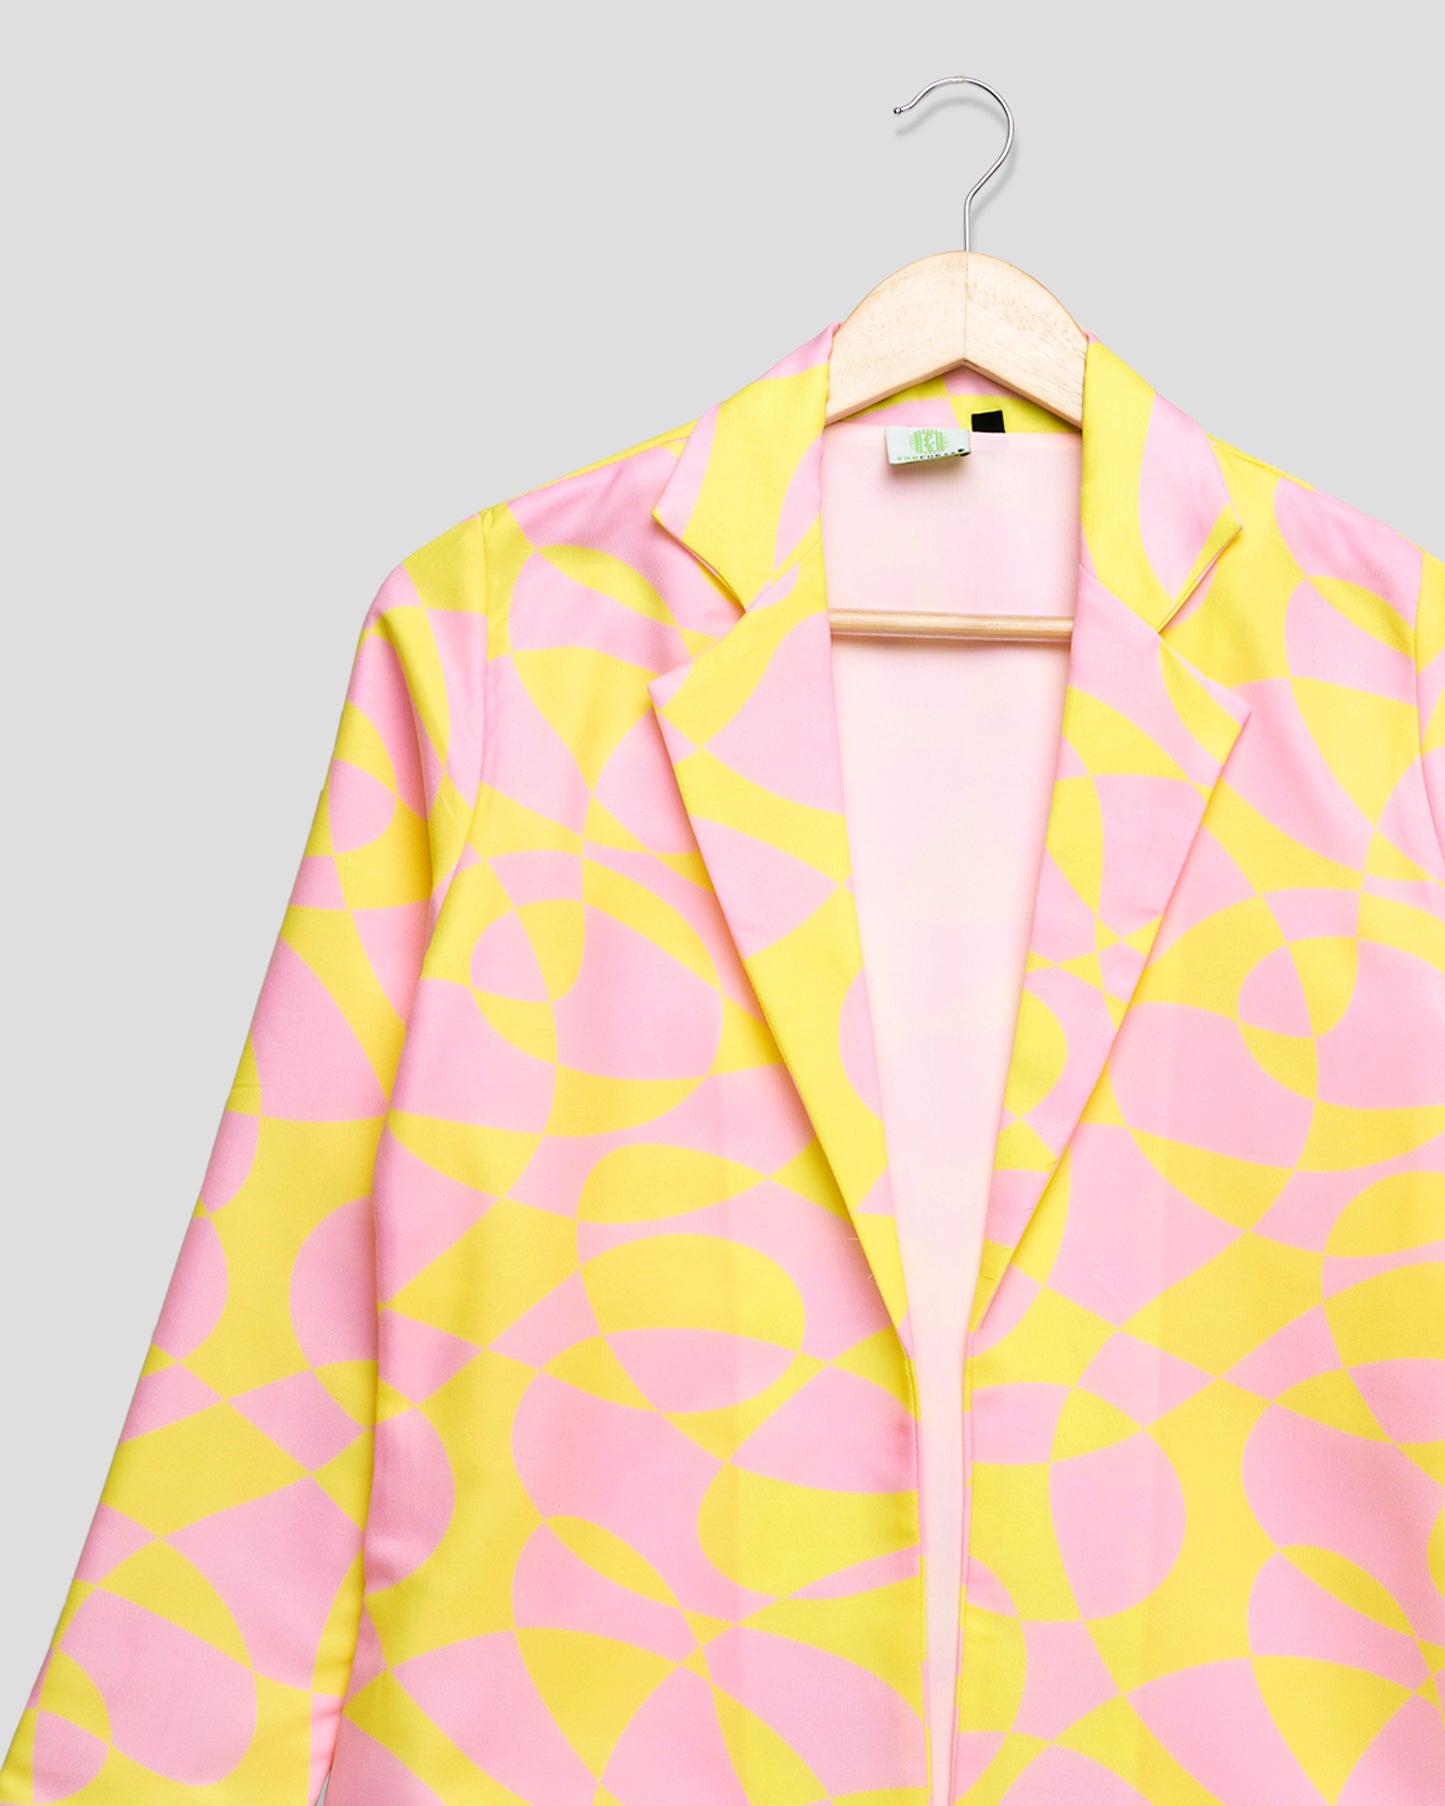 Allure Jacket for Women – A Stylish Statement Piece